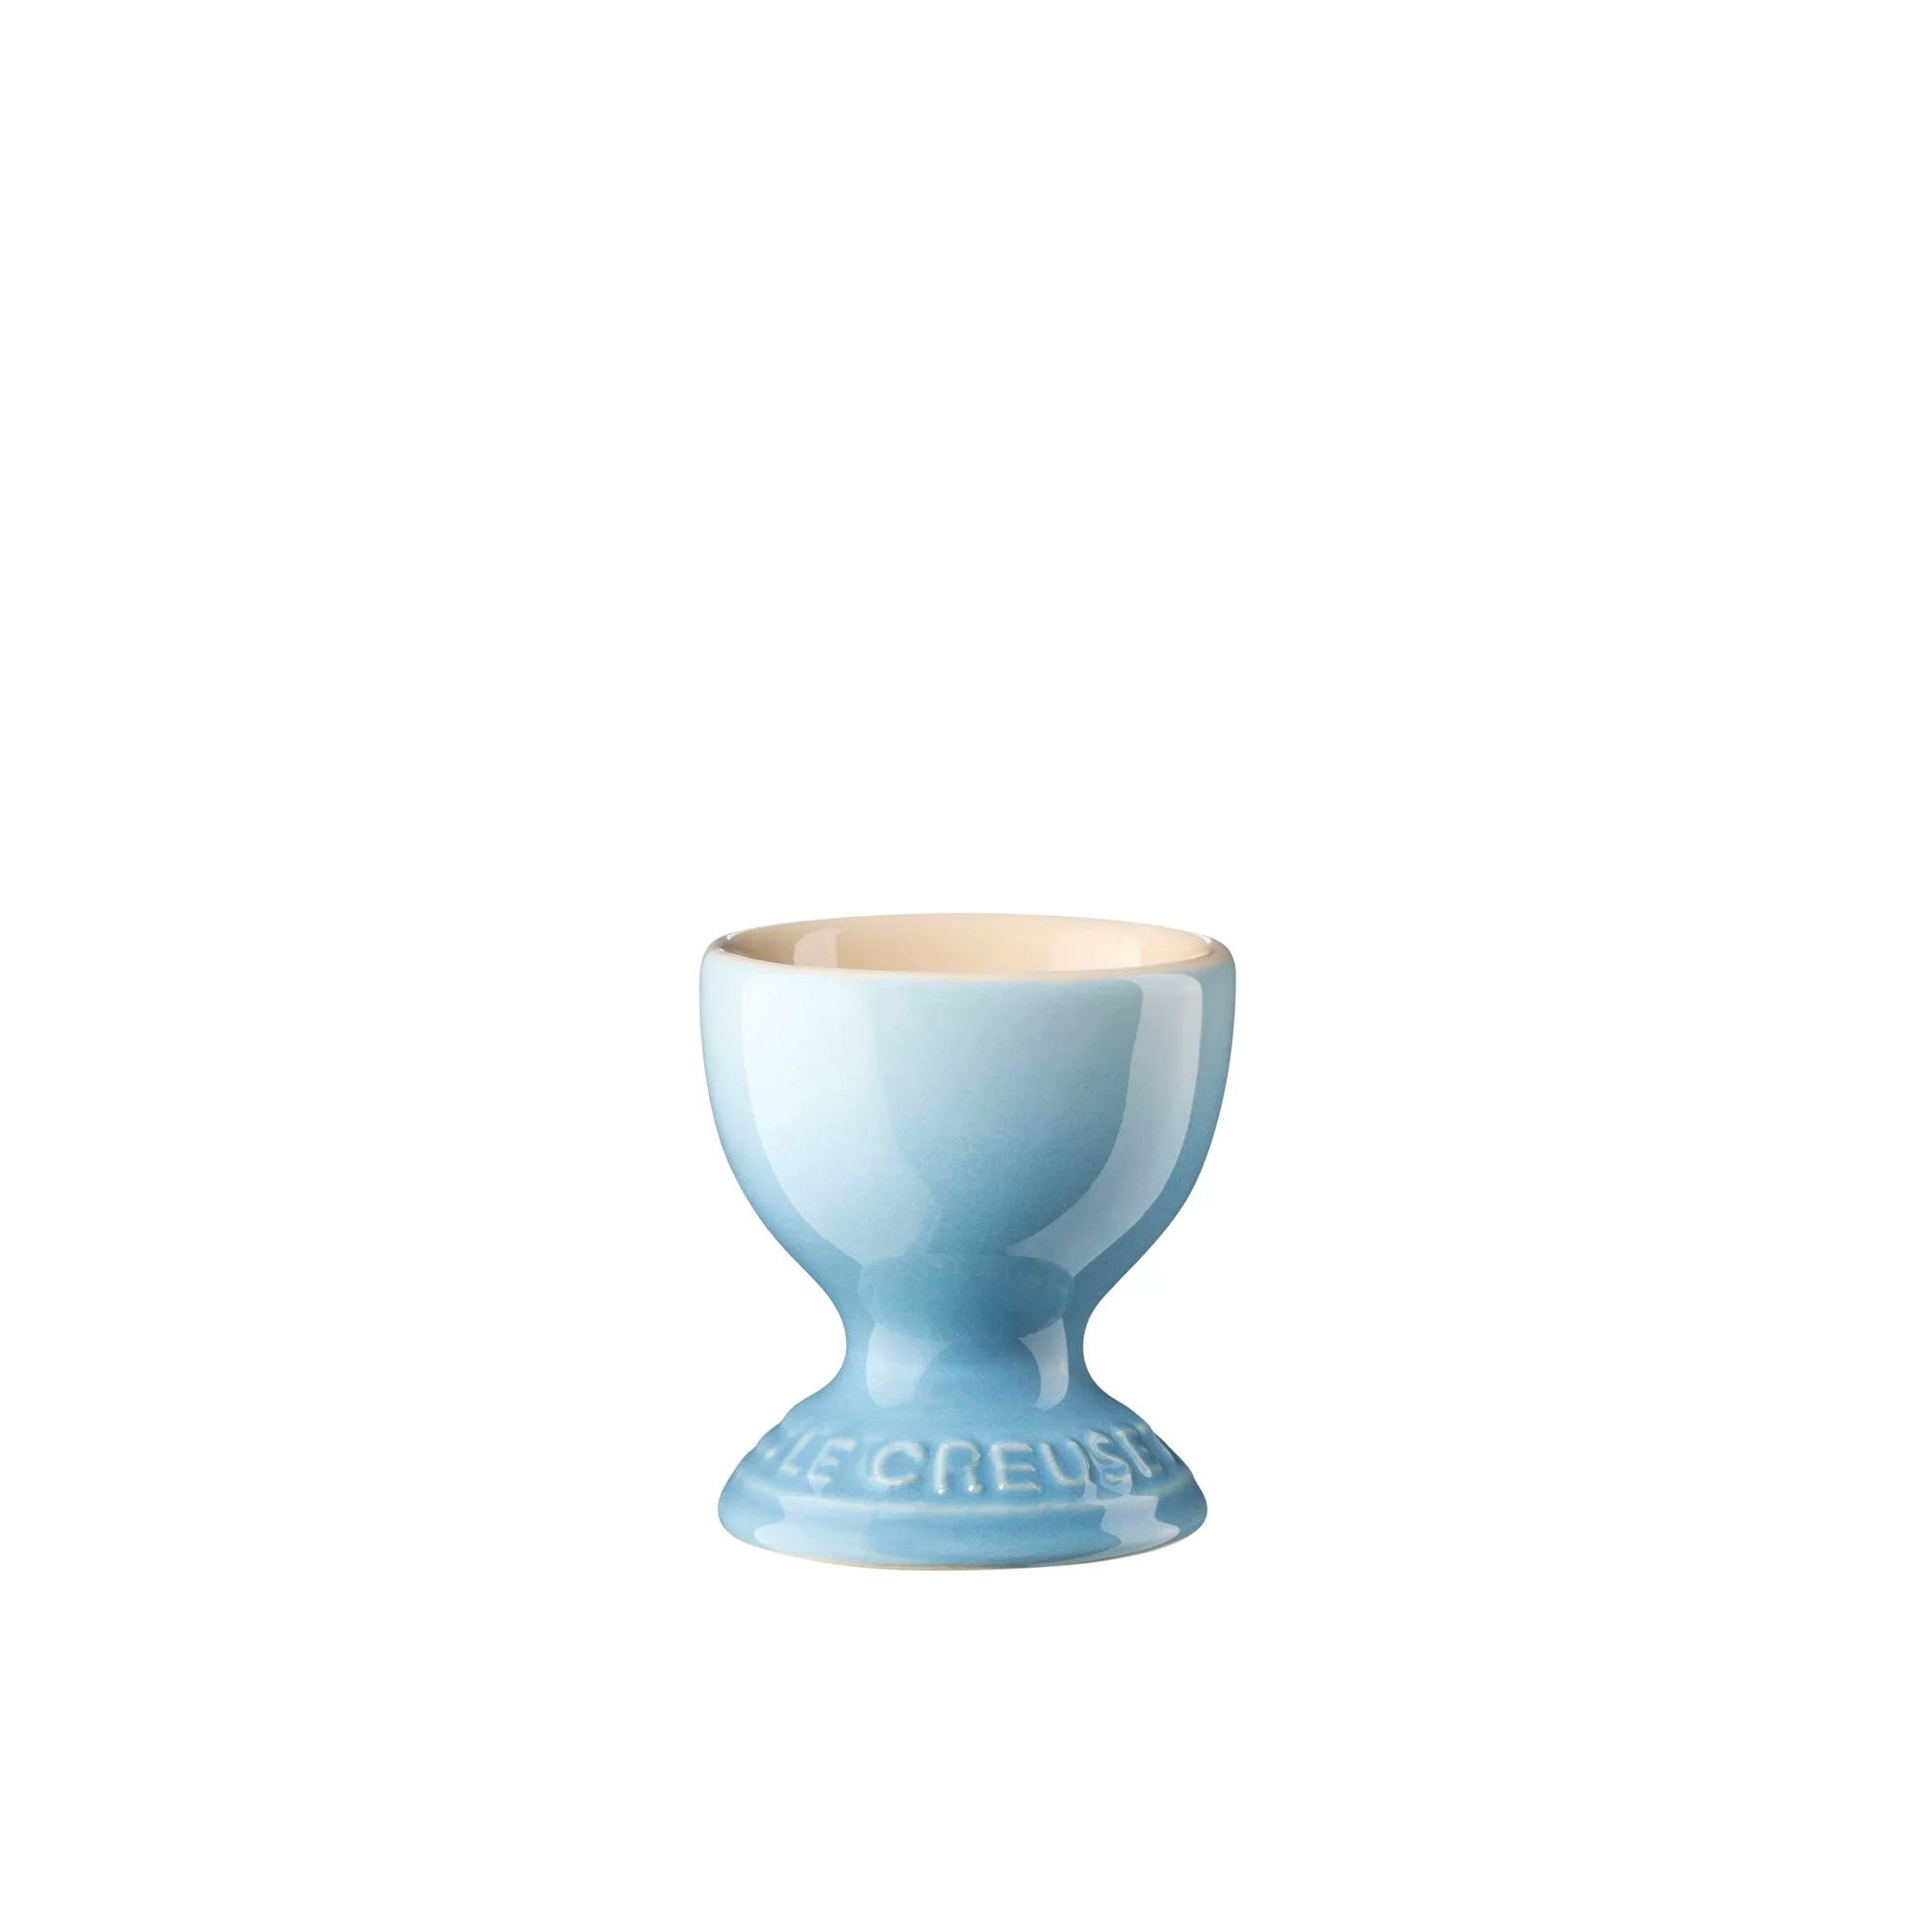 Le Creuset Stoneware Egg Cup Coastal Blue Image 1